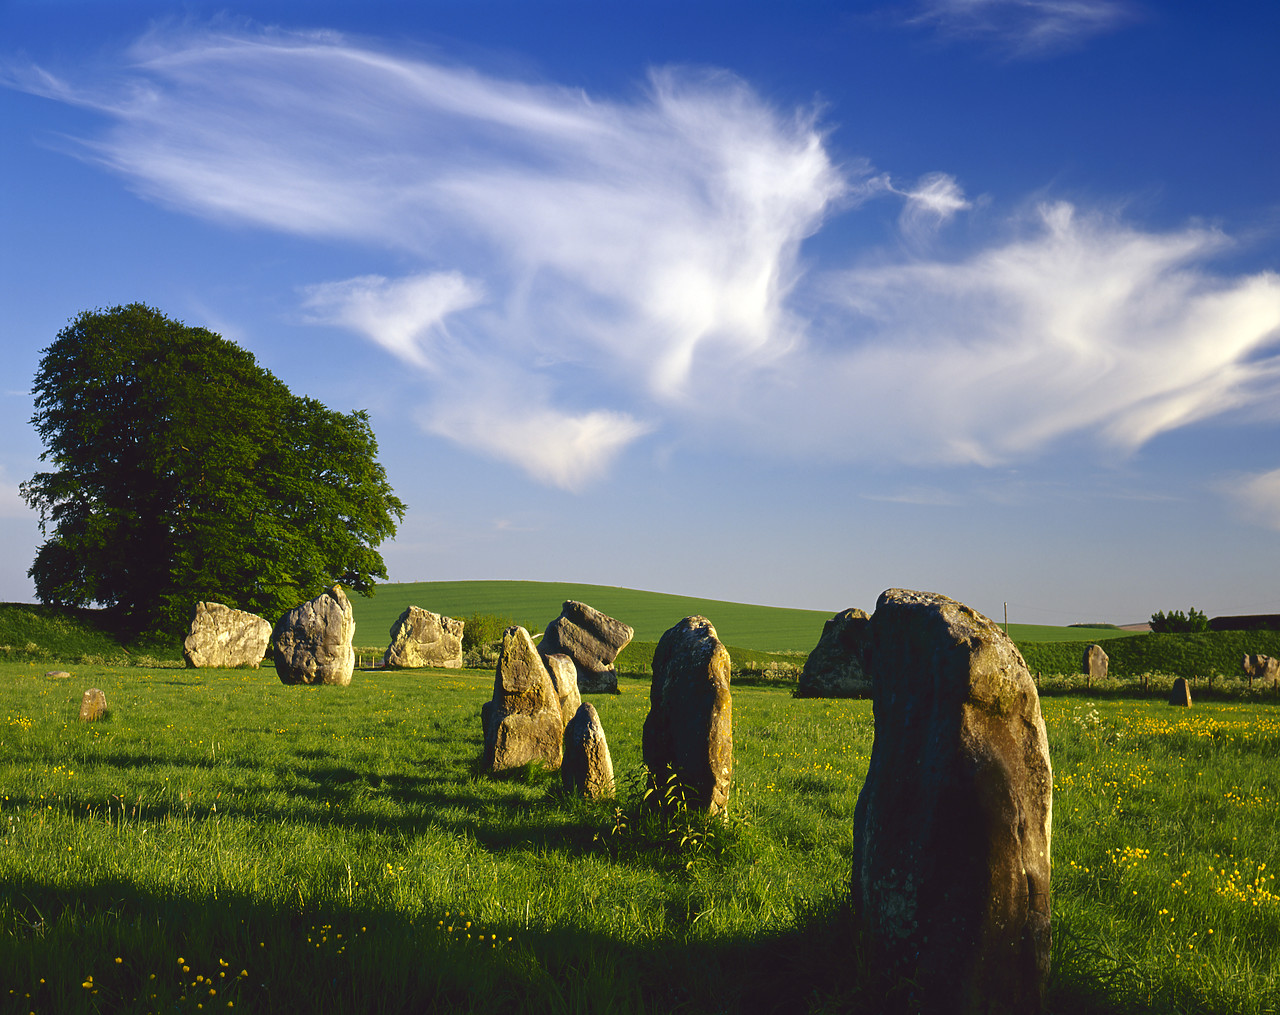 #200167-1 - The Standing Stones, Avebury, Wiltshire, England